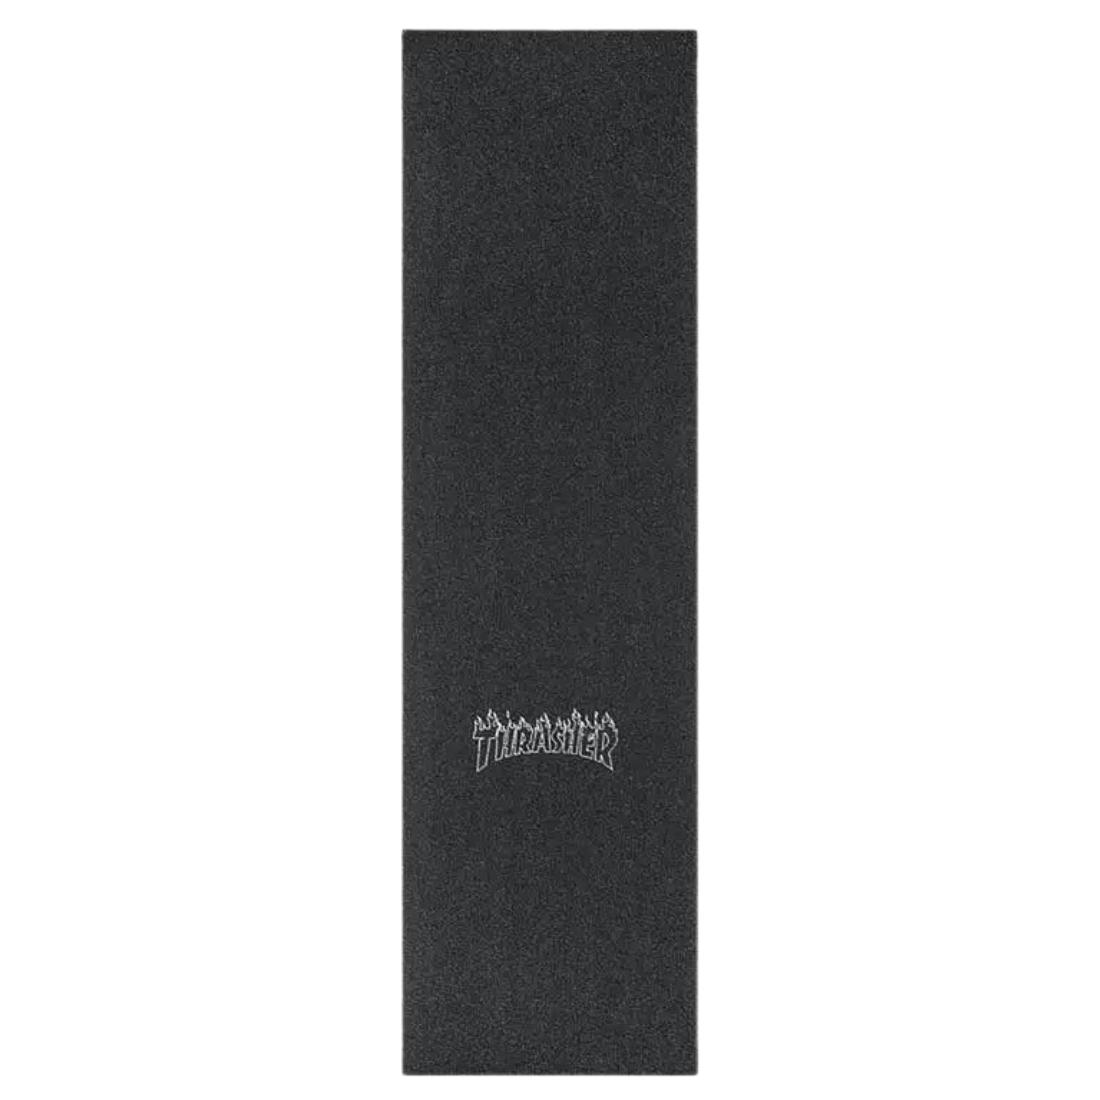 Mob Grip Thrasher Flame Logo Lazer Cut Grip Tape - Black - Skateboard Grip Tape by Mob Grip 9.0 inch